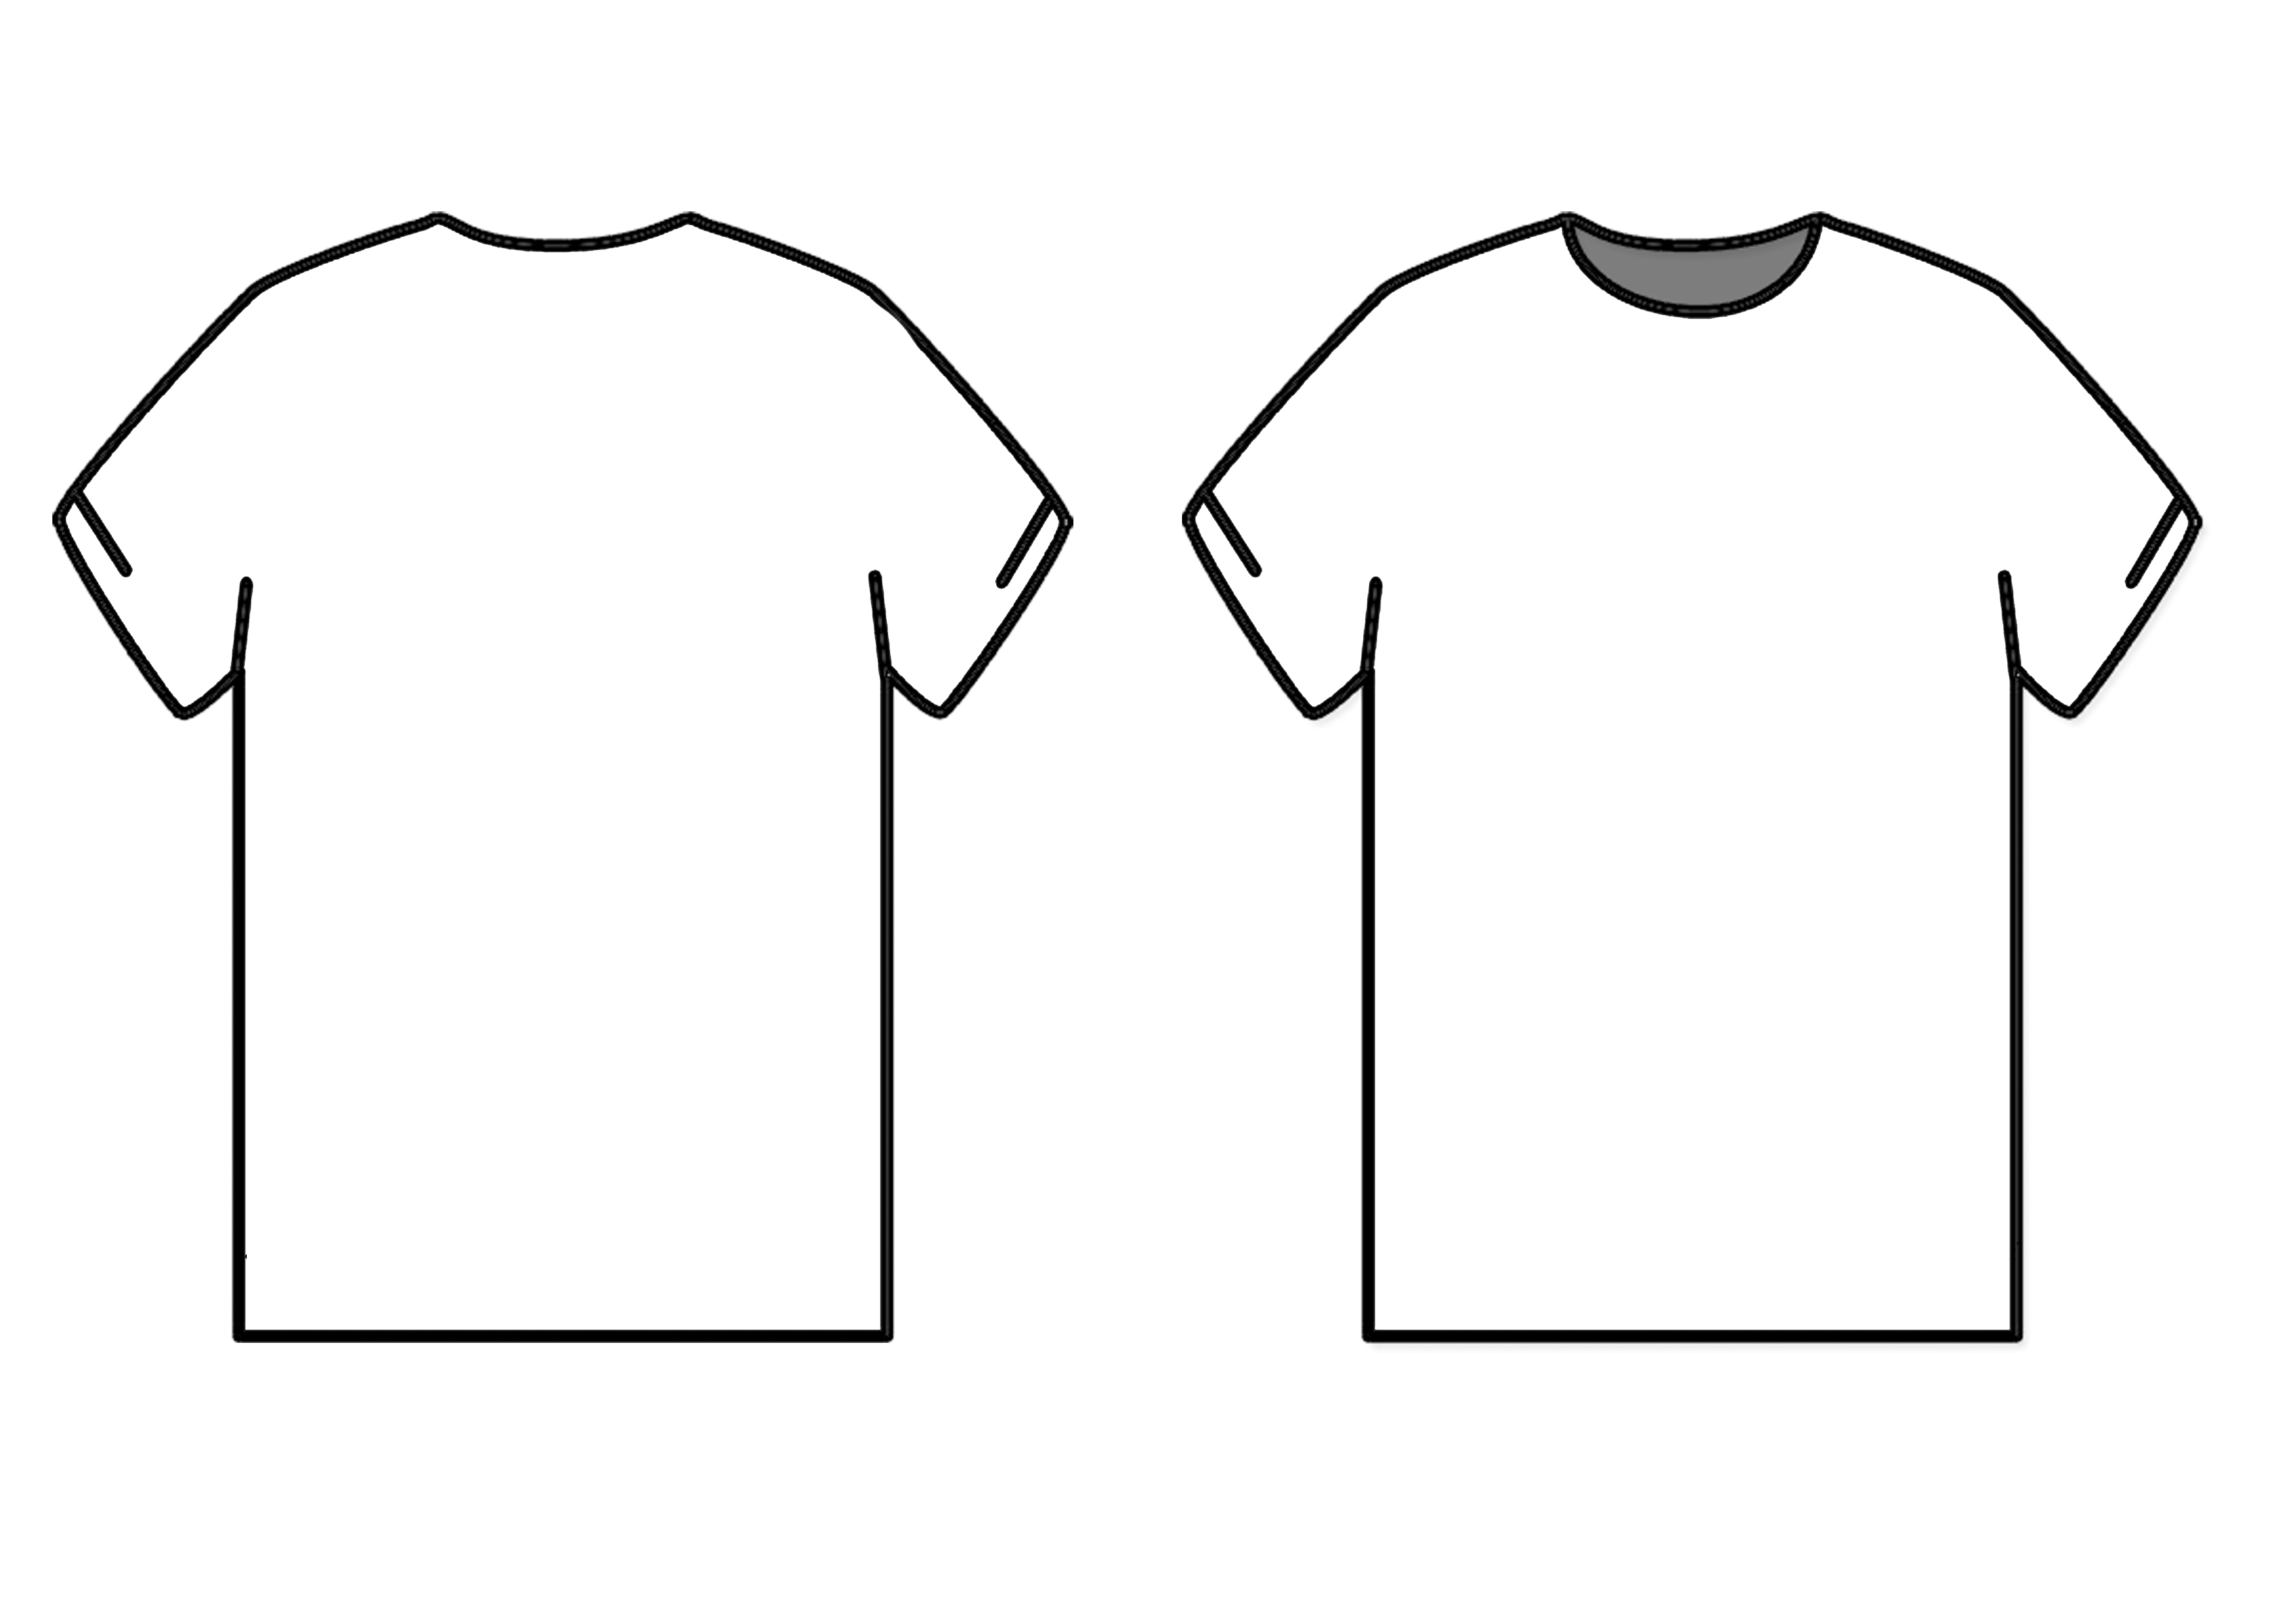 15-tee-shirt-template-for-photoshop-images-shirt-design-template-clipart-best-clipart-best